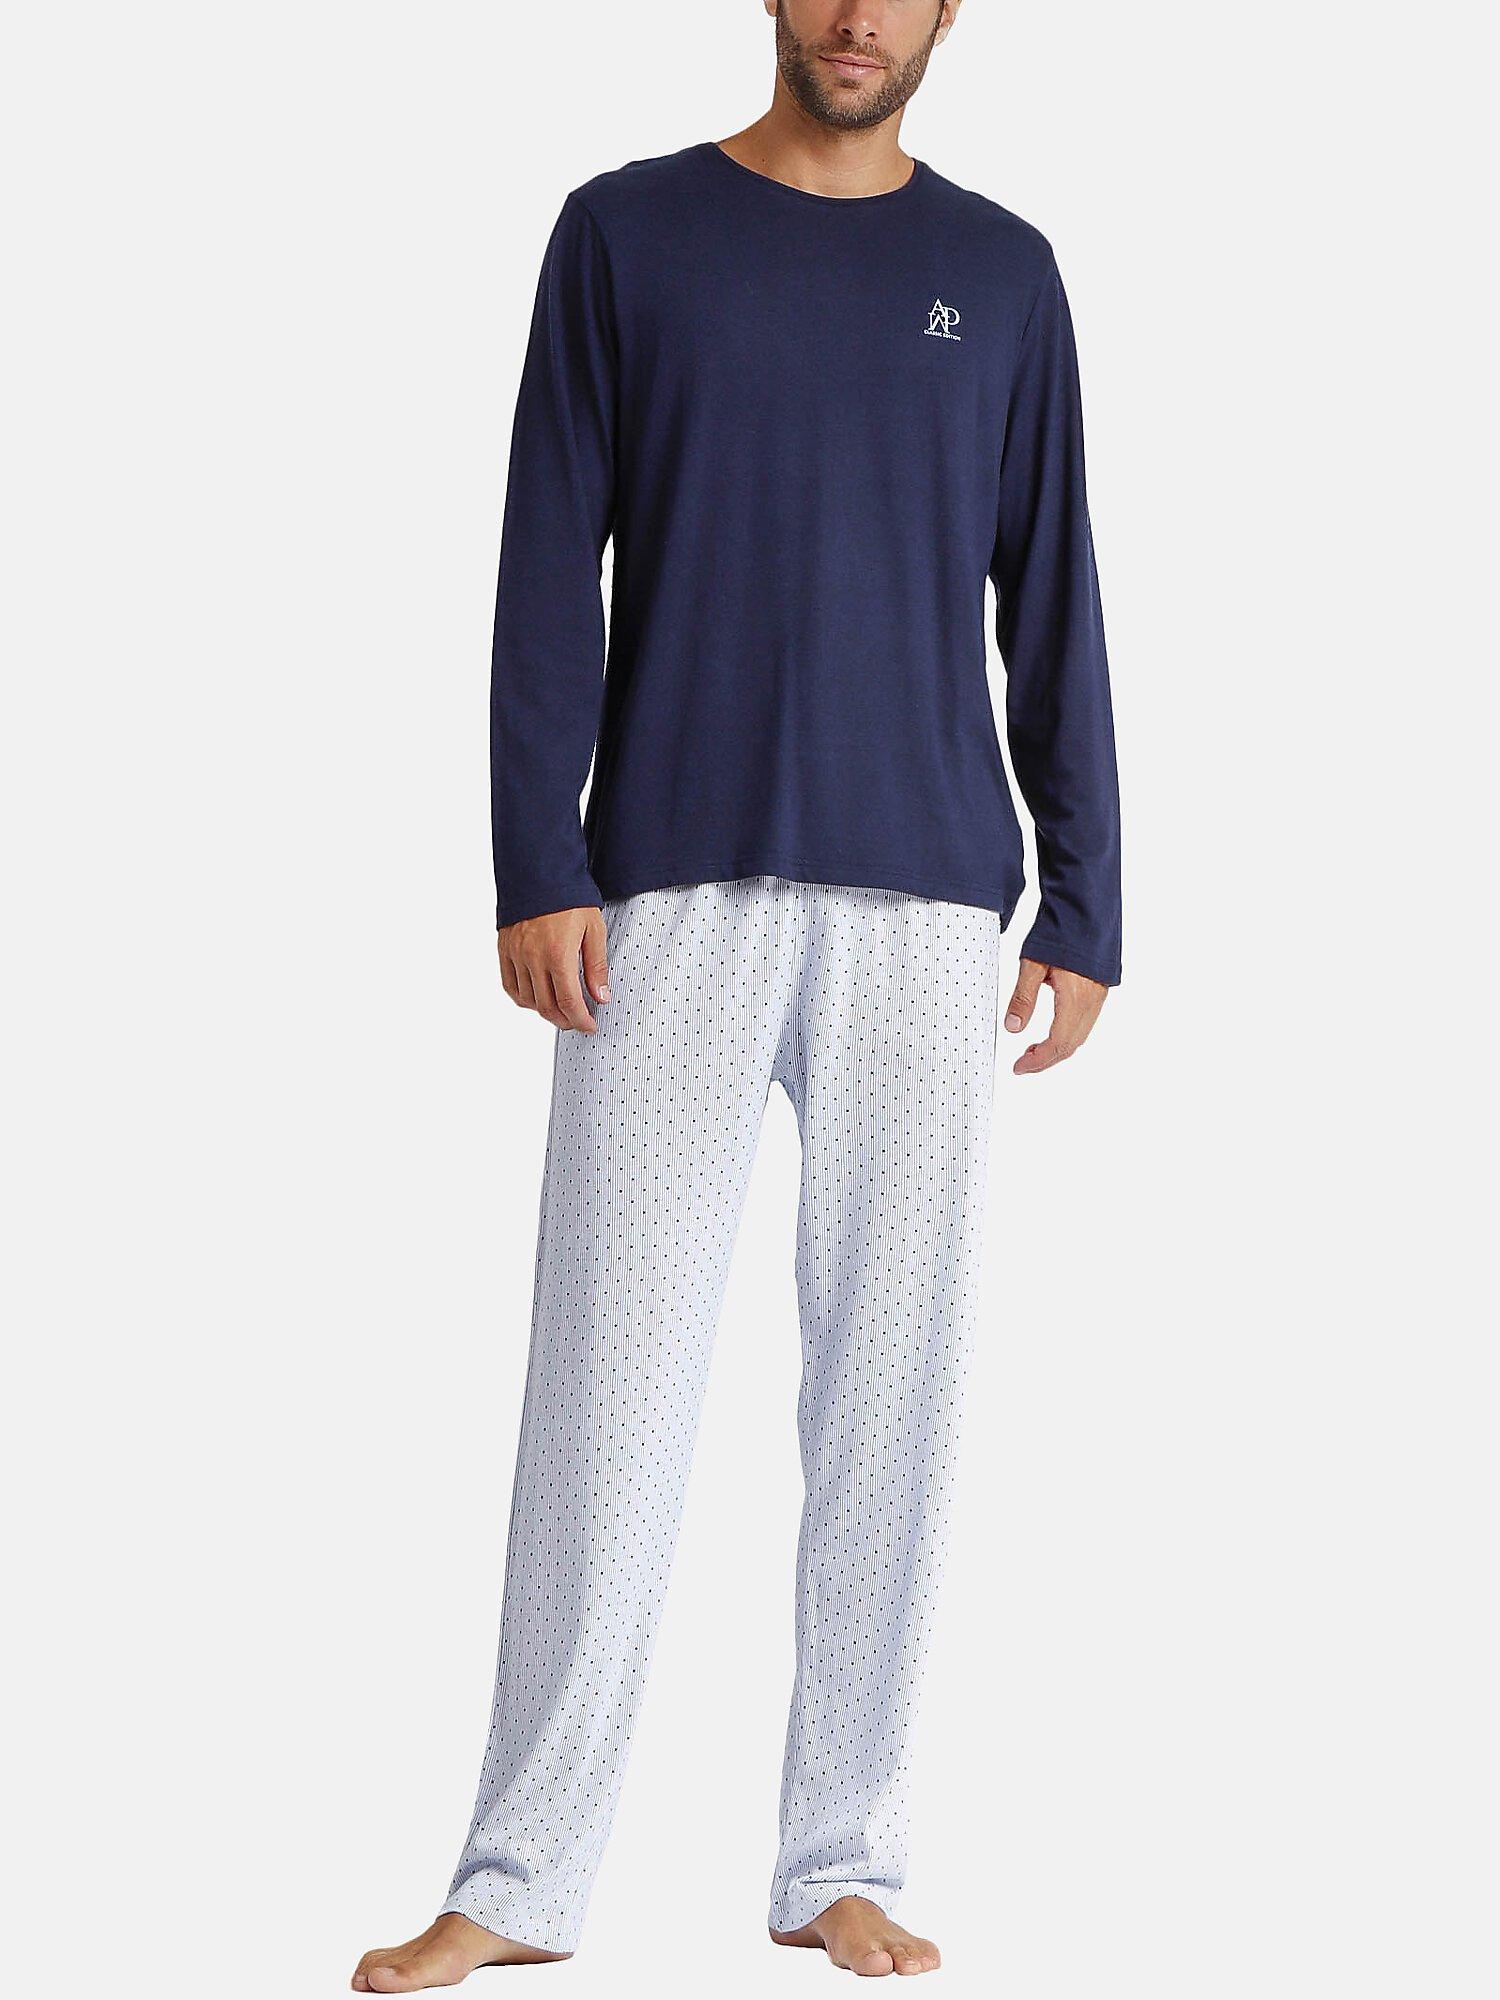 Pyjama Hose Top Langarm Stripes And Dots Herren Blau L von Admas